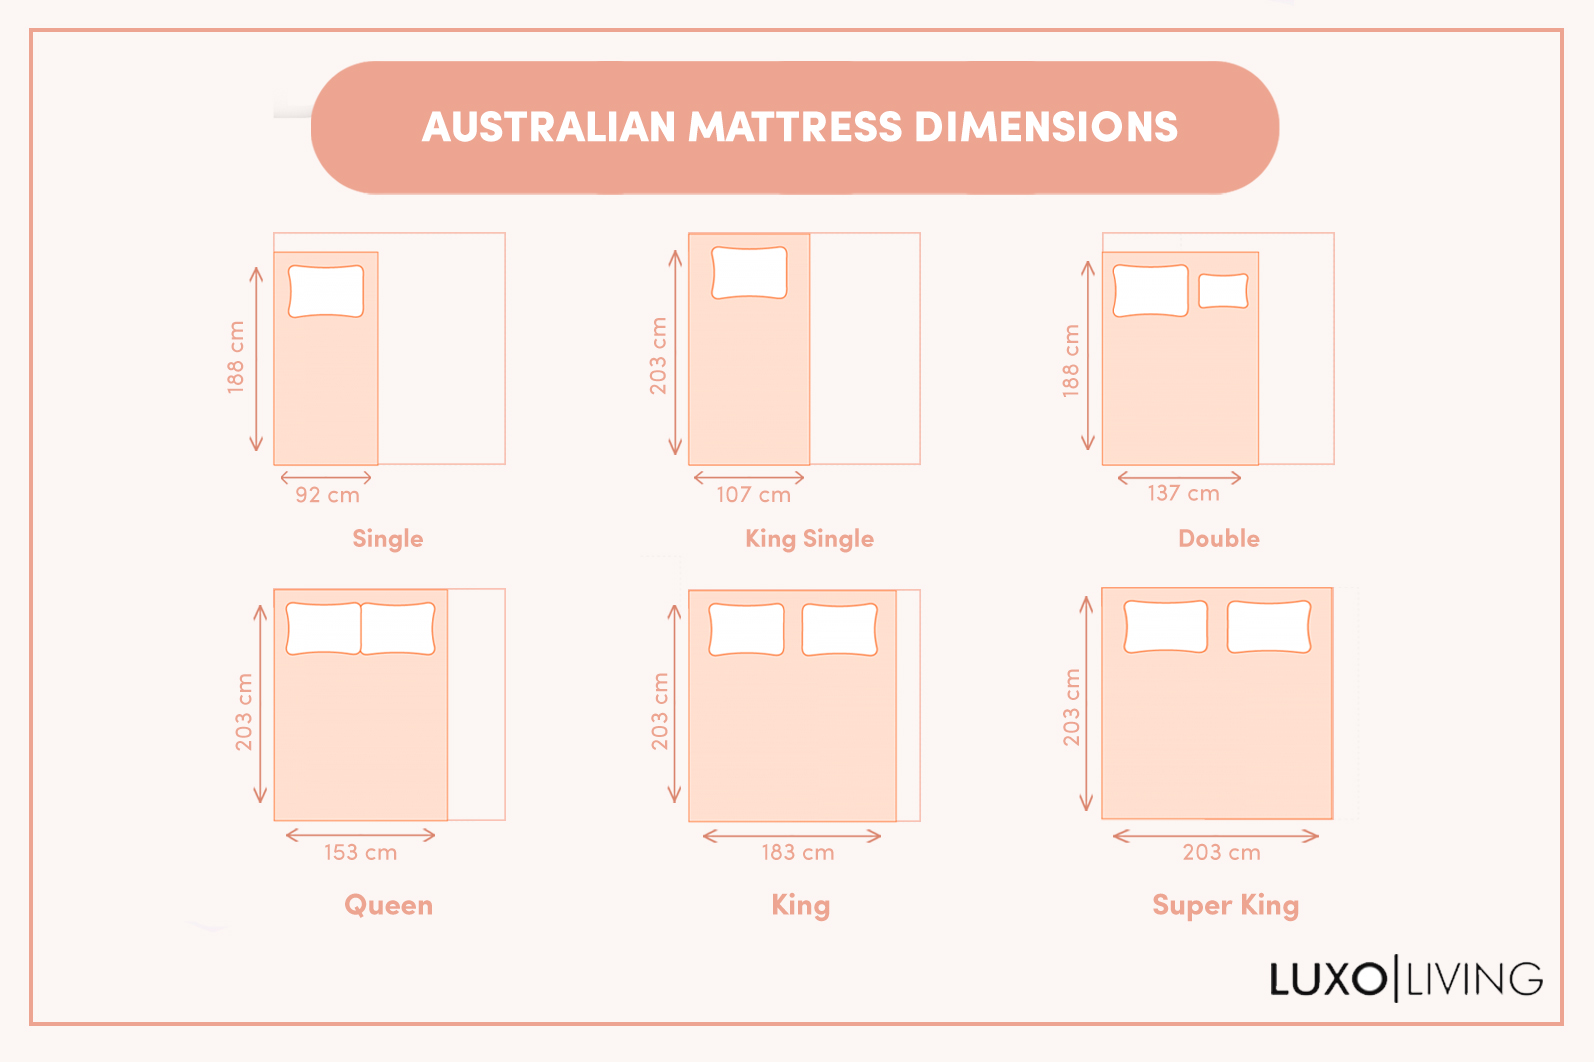 single mattress size in cm australia